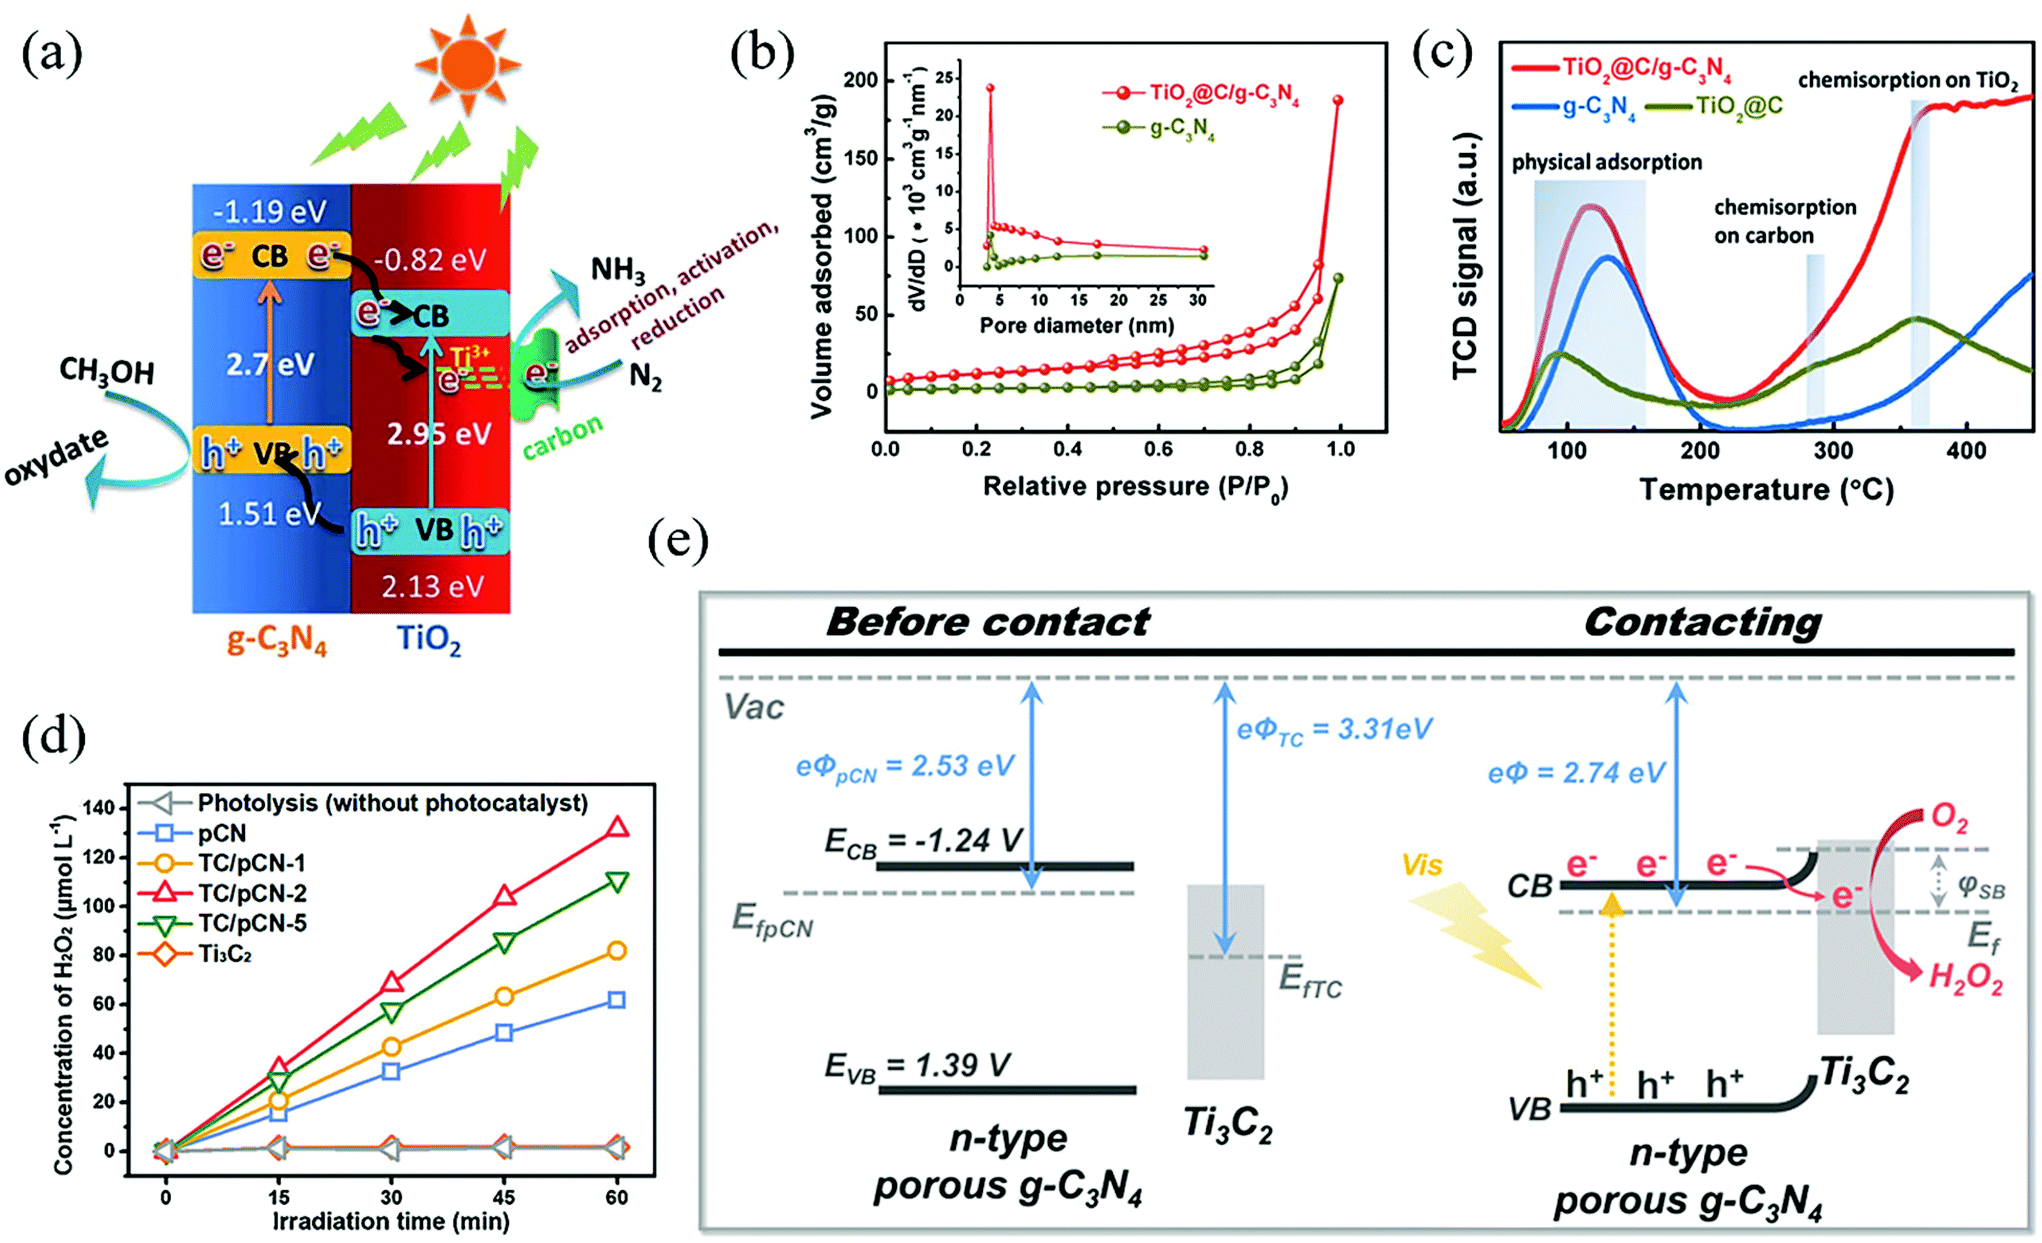 State-of-the-art recent progress in MXene-based photocatalysts: a  comprehensive review - Nanoscale (RSC Publishing) DOI:10.1039/D1NR02224E